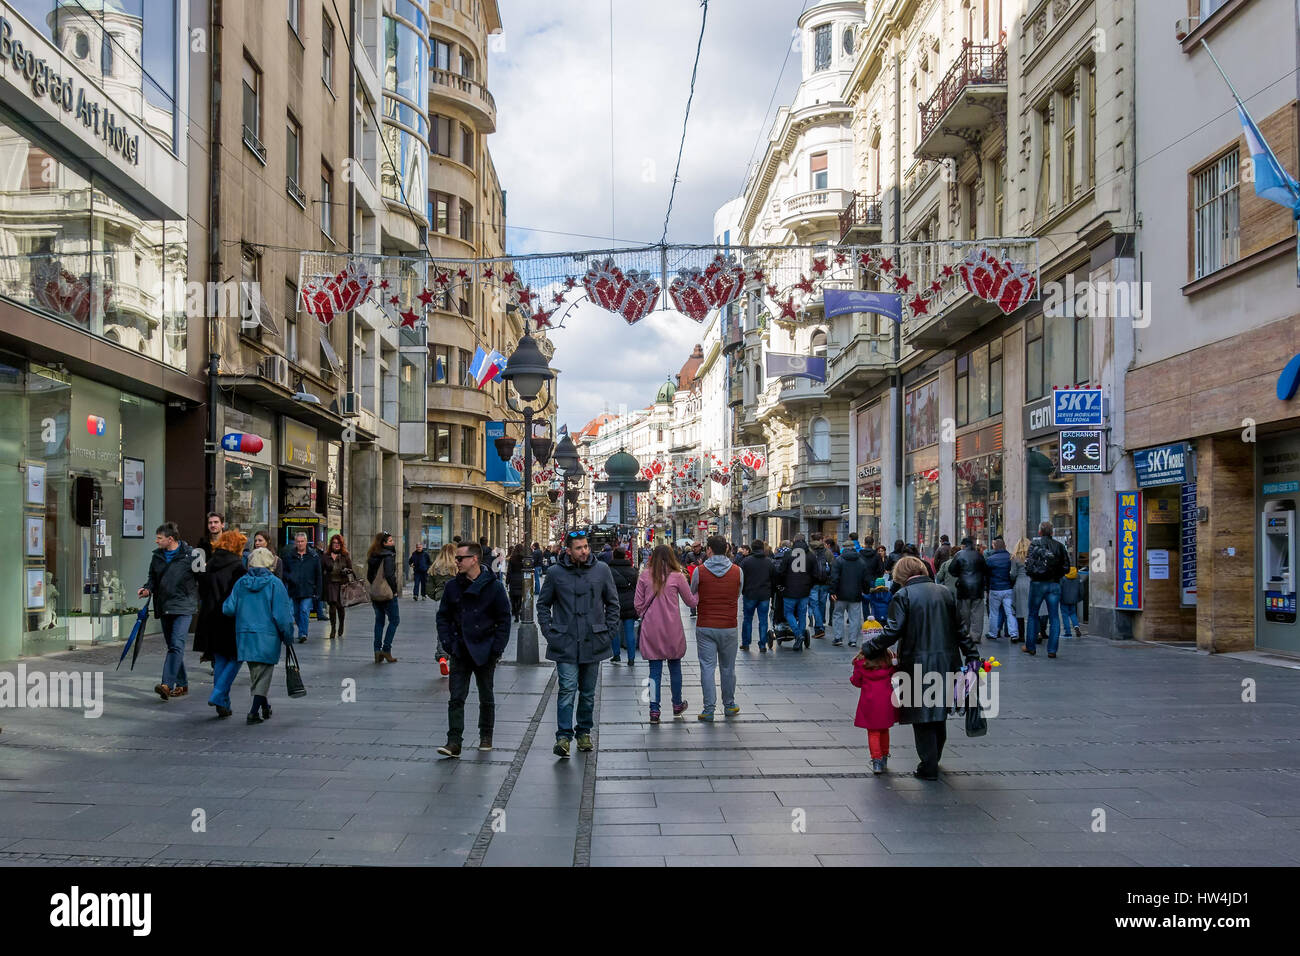 February 25th 2017 - Belgrade, Serbia - Knez Mihailova street in the center of Belgrade, full of people Stock Photo